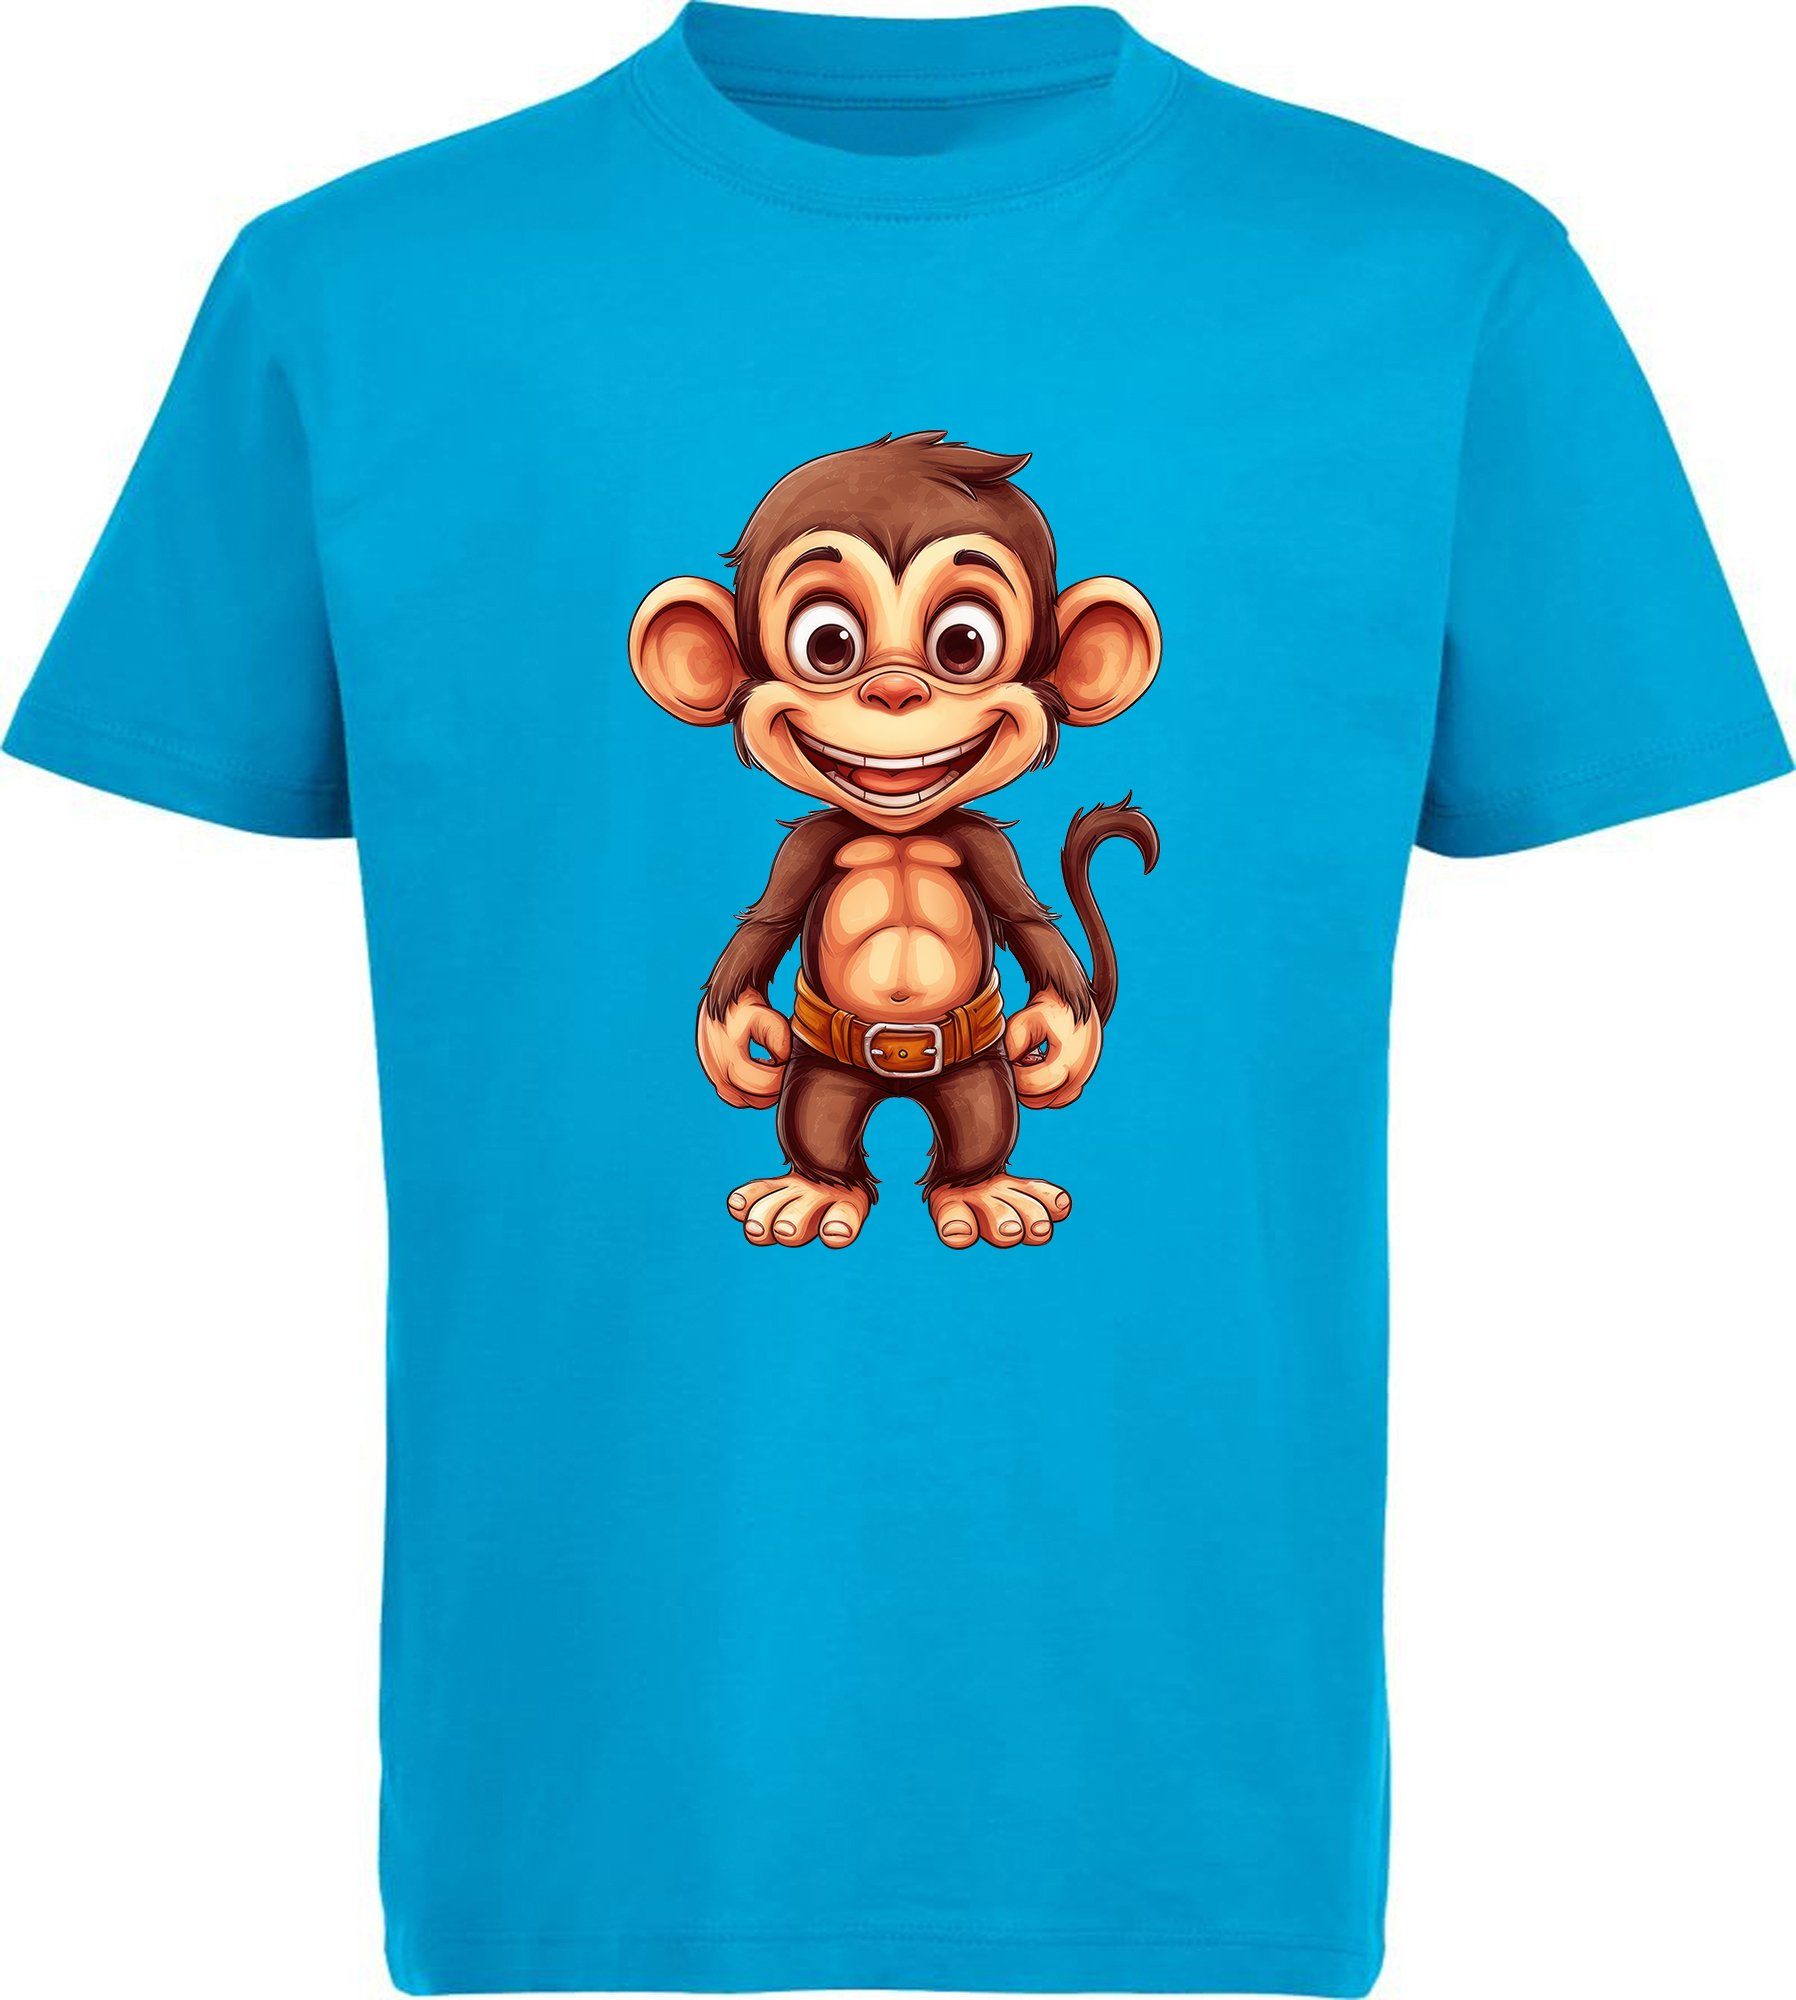 MyDesign24 T-Shirt Kinder - Aufdruck, blau Schimpanse i276 aqua Baby Affe Wildtier Shirt Baumwollshirt mit Print bedruckt